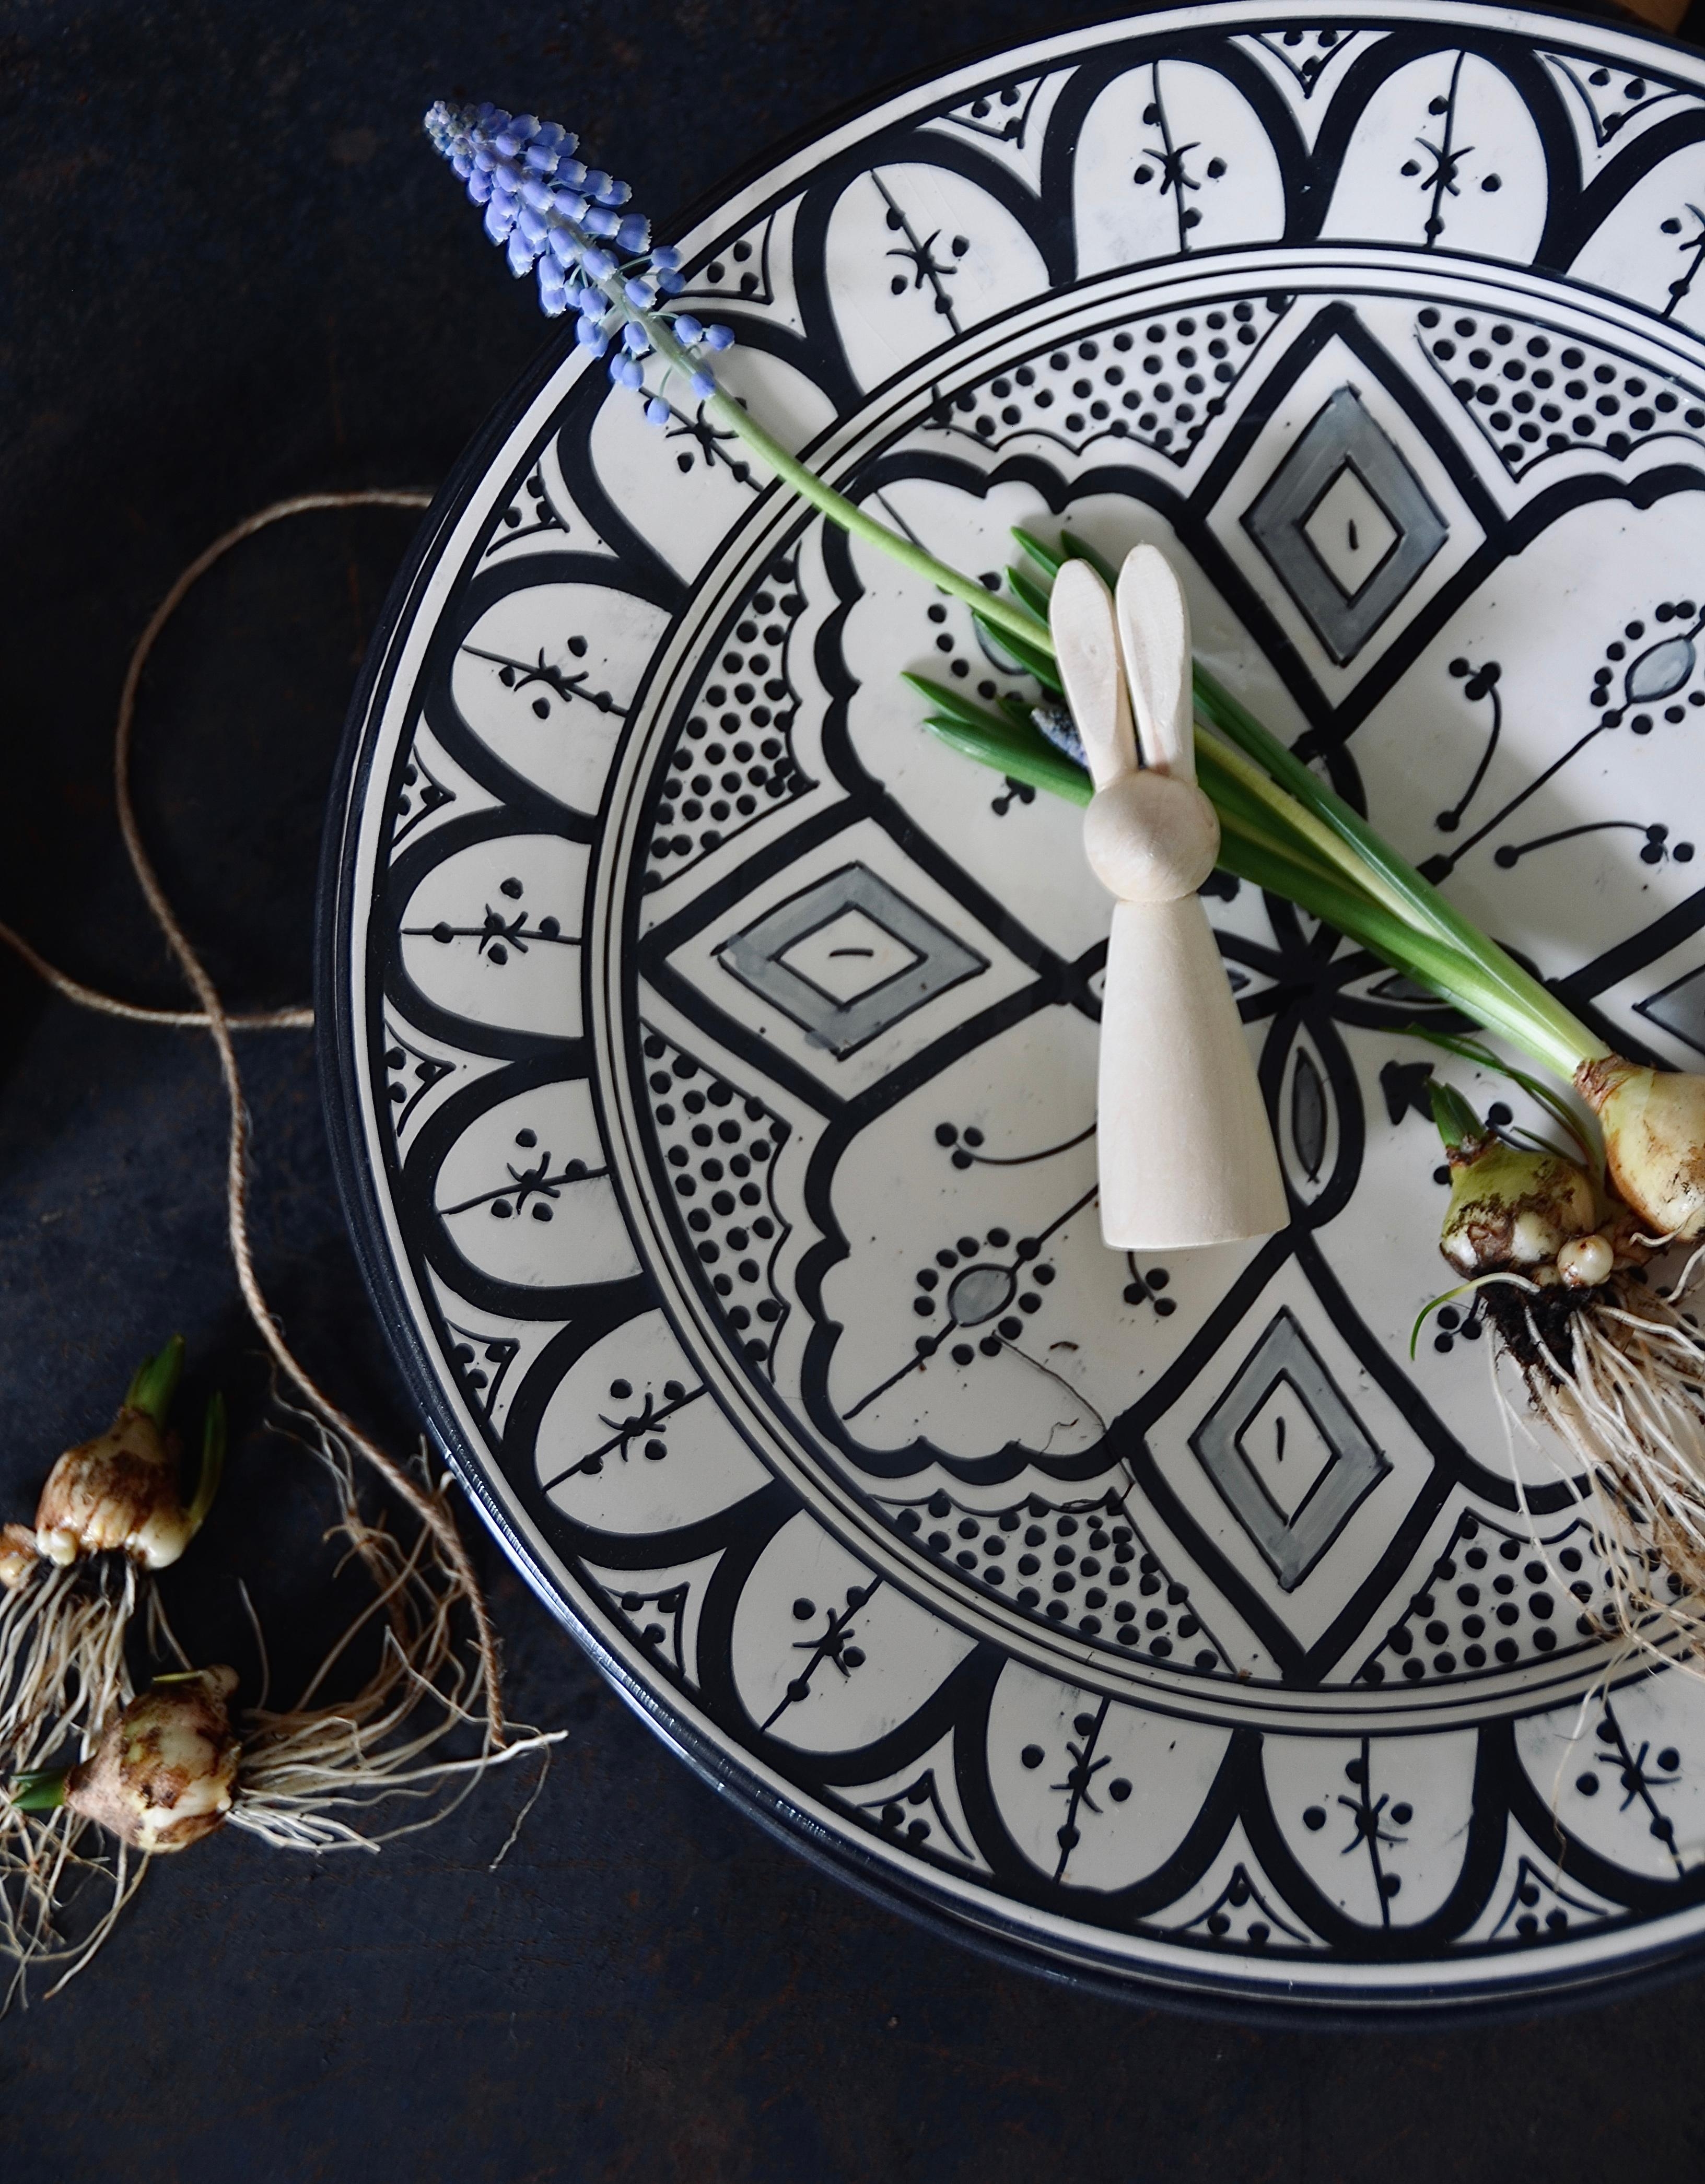 Frühlingsvorboten...#hase #marokkanisch #keramik #frühling #schwedenhaus #vintage #frühlingsblumen #frühlingsdeko